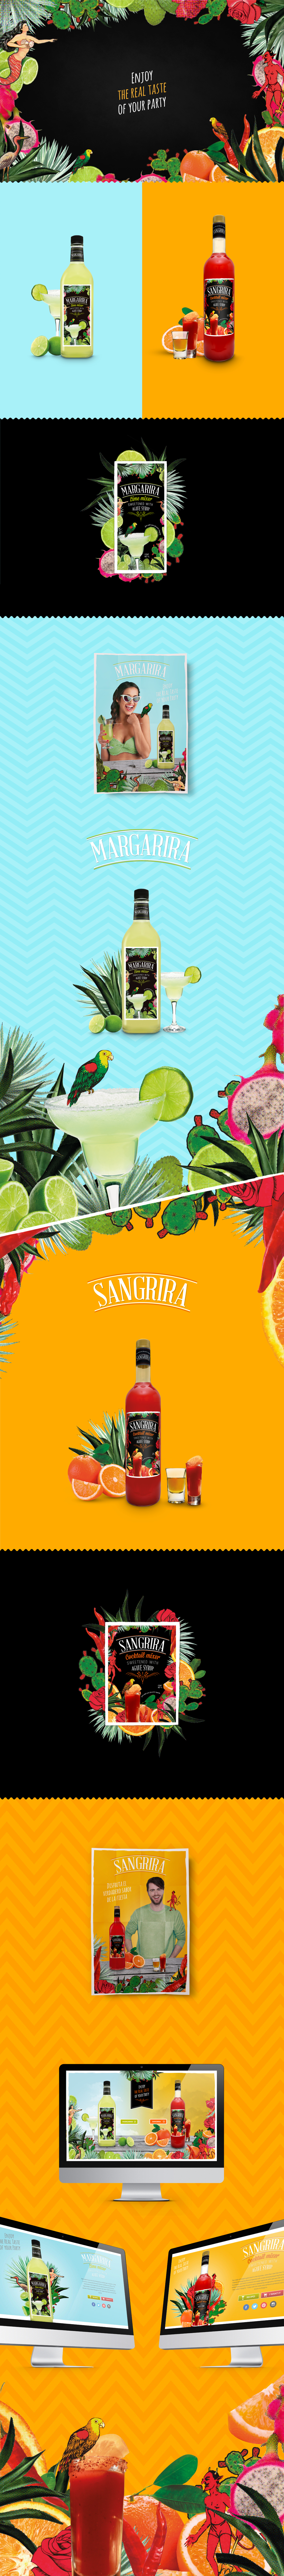 Tequila mexico agave drink margarita Sangrita fresh loteria kitsch Tropical bottle Label bar Food 